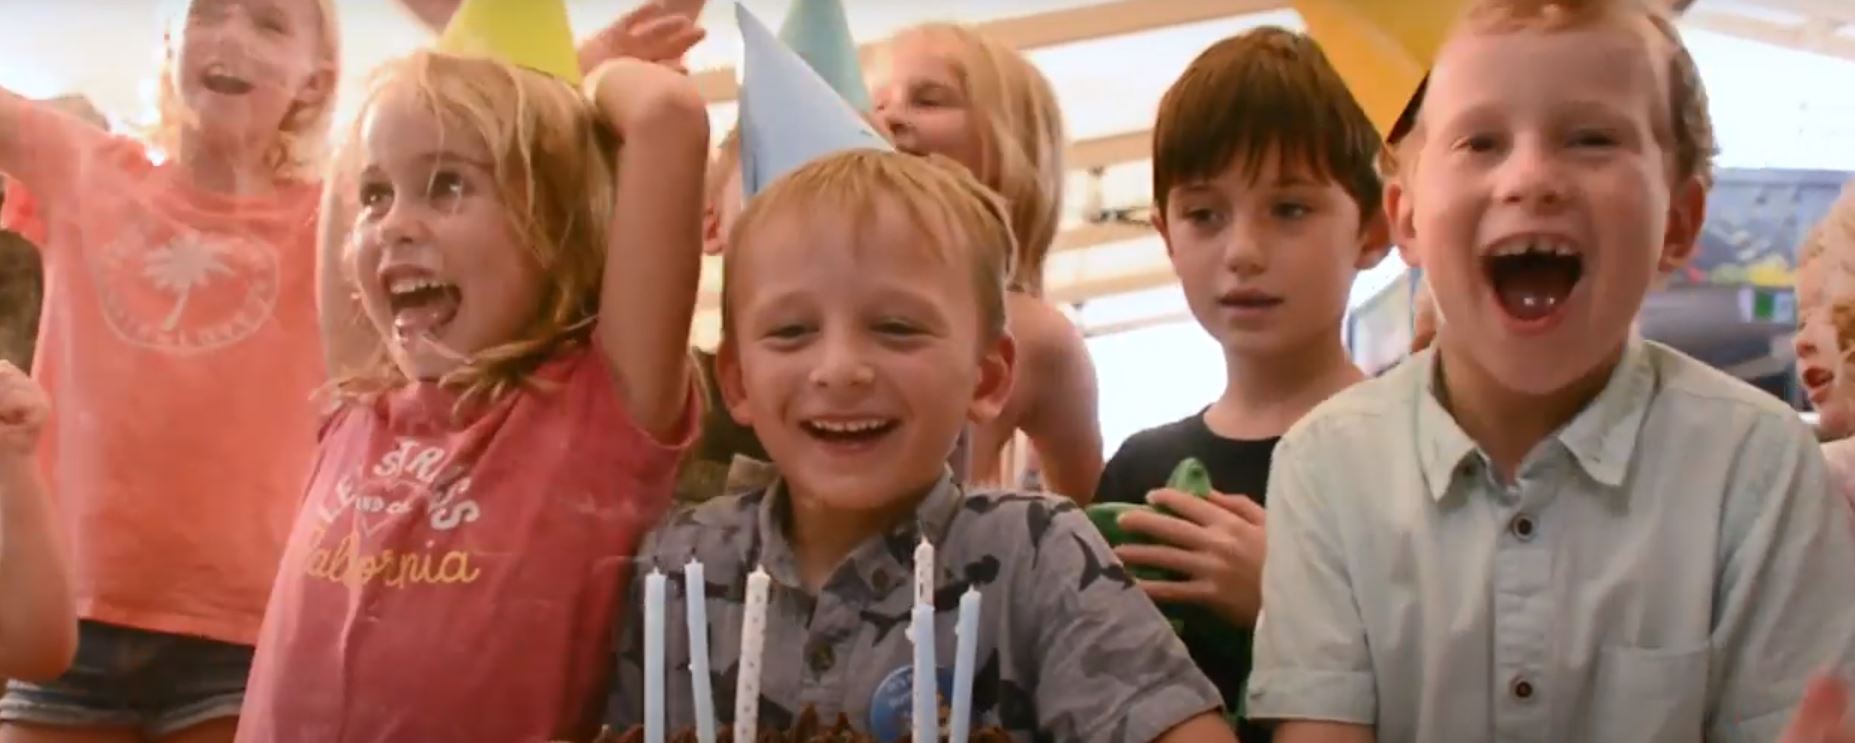 Kids Birthday Parties Video